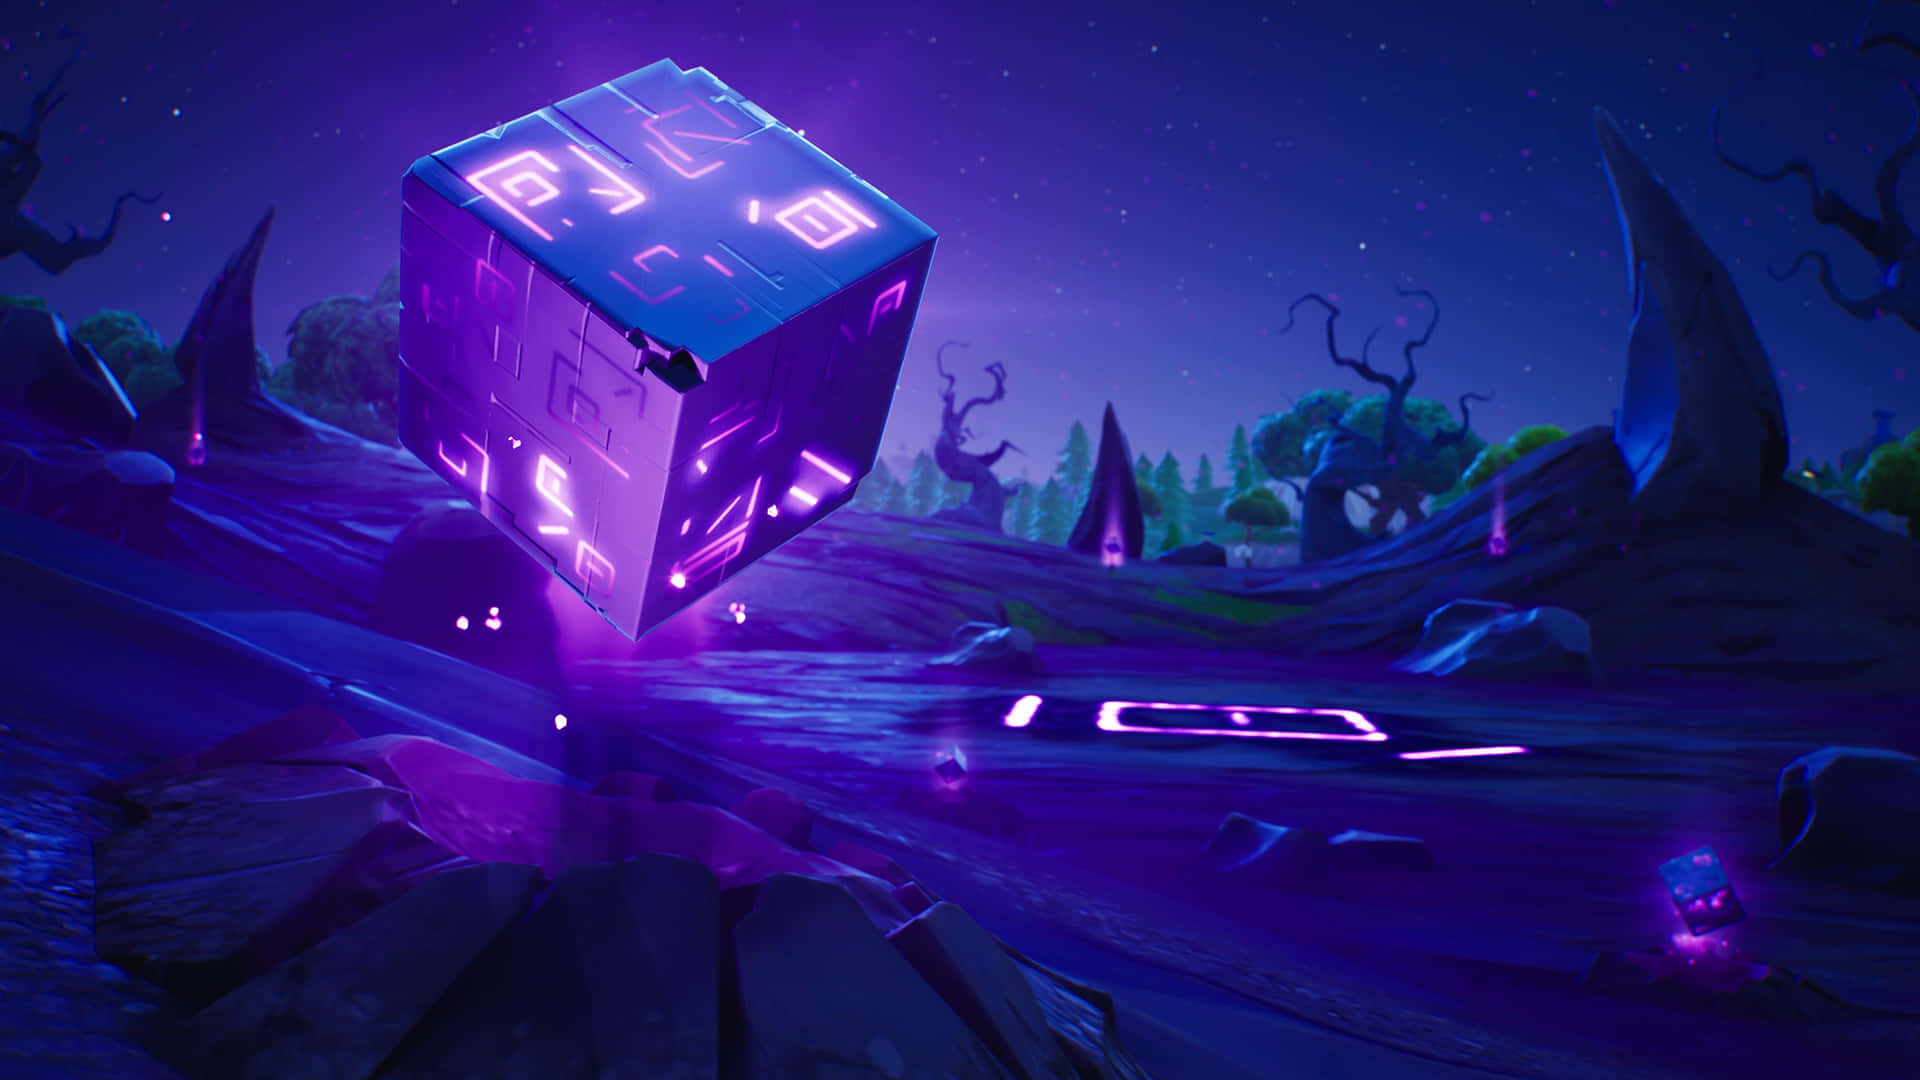 Fortnite - A Purple Cube In The Night Sky Wallpaper